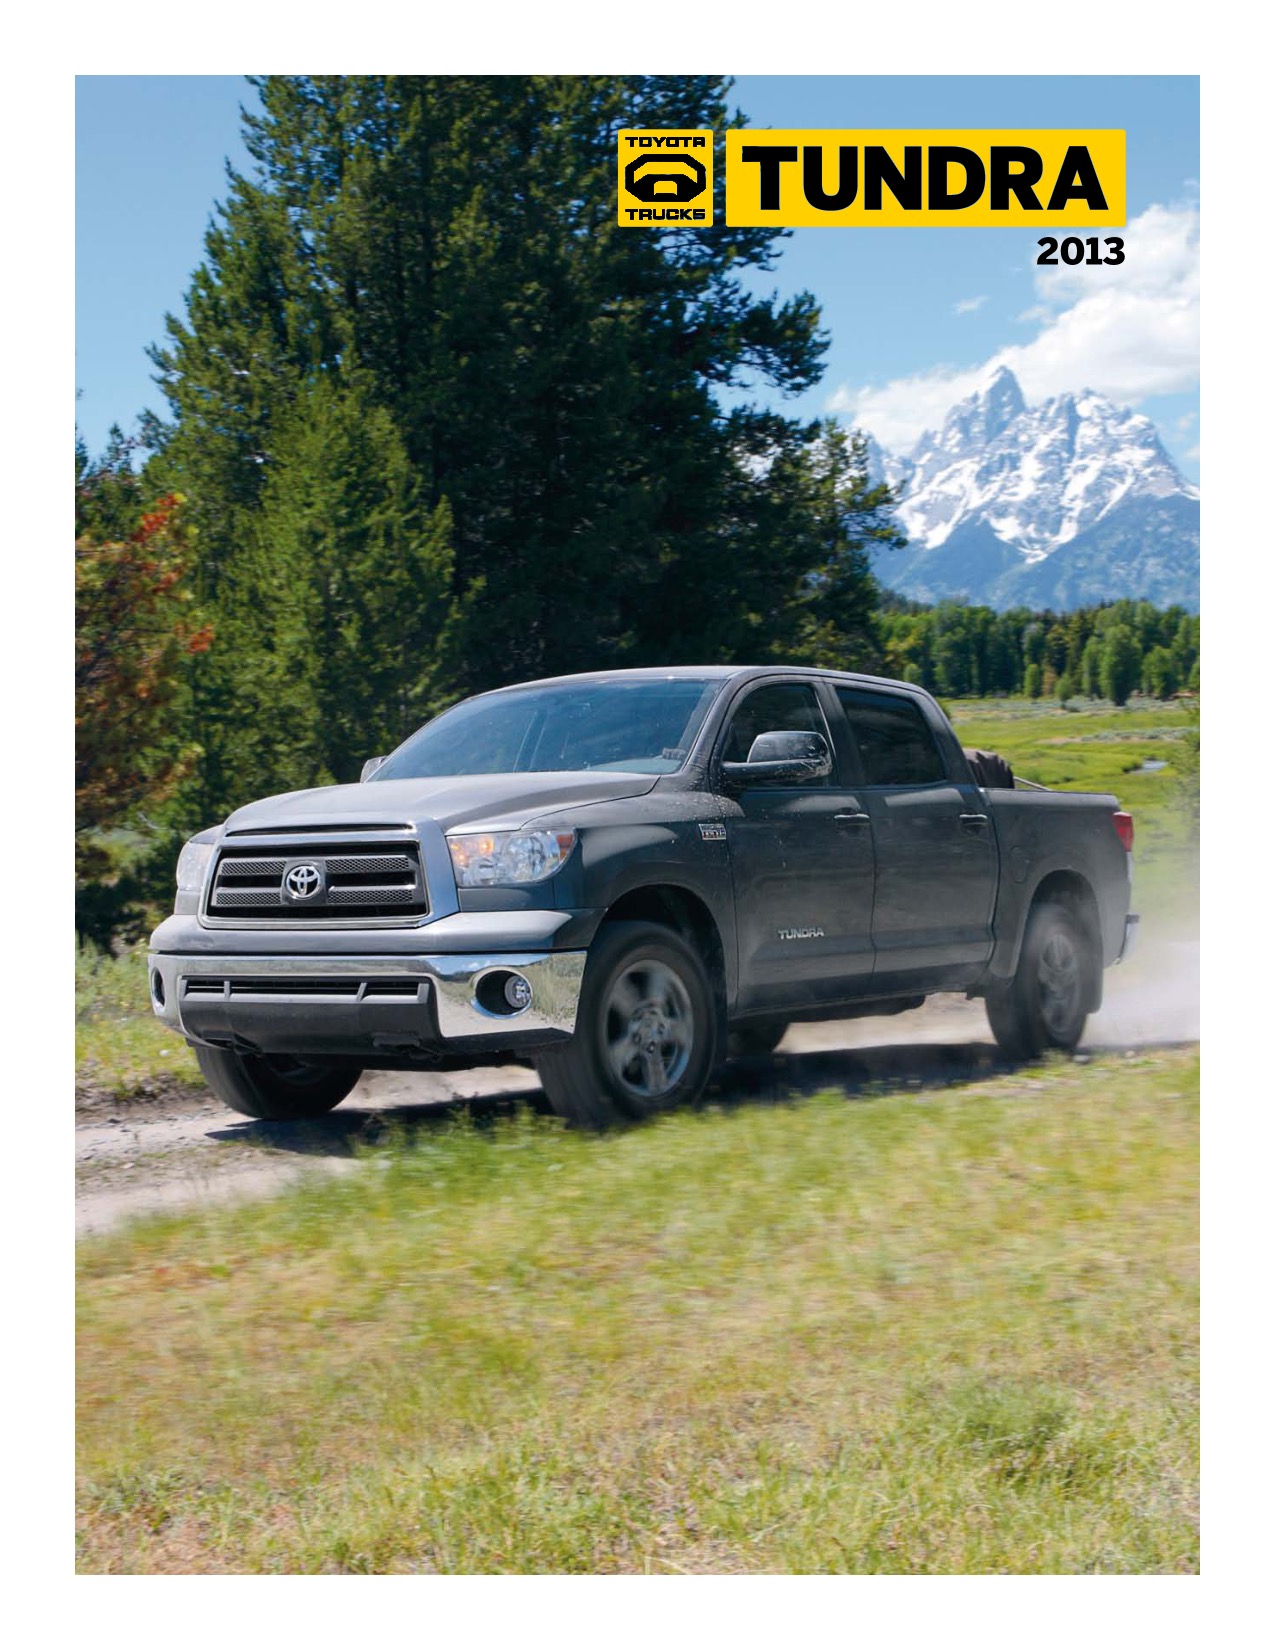 2013 Toyota Tundra Brochure